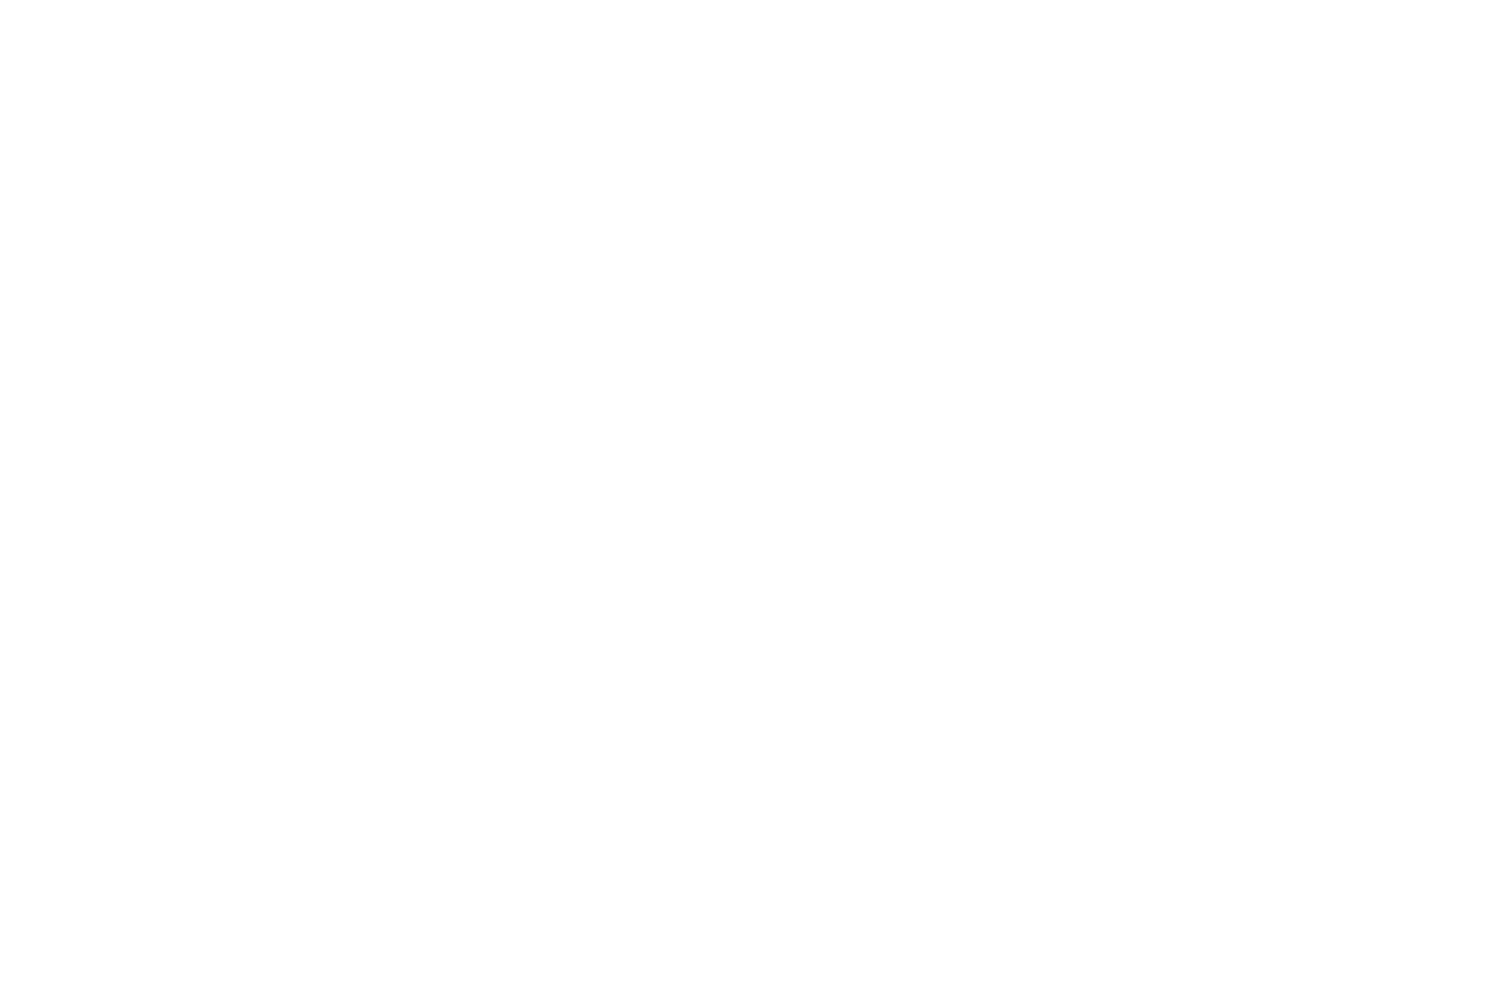 C3 New Hope